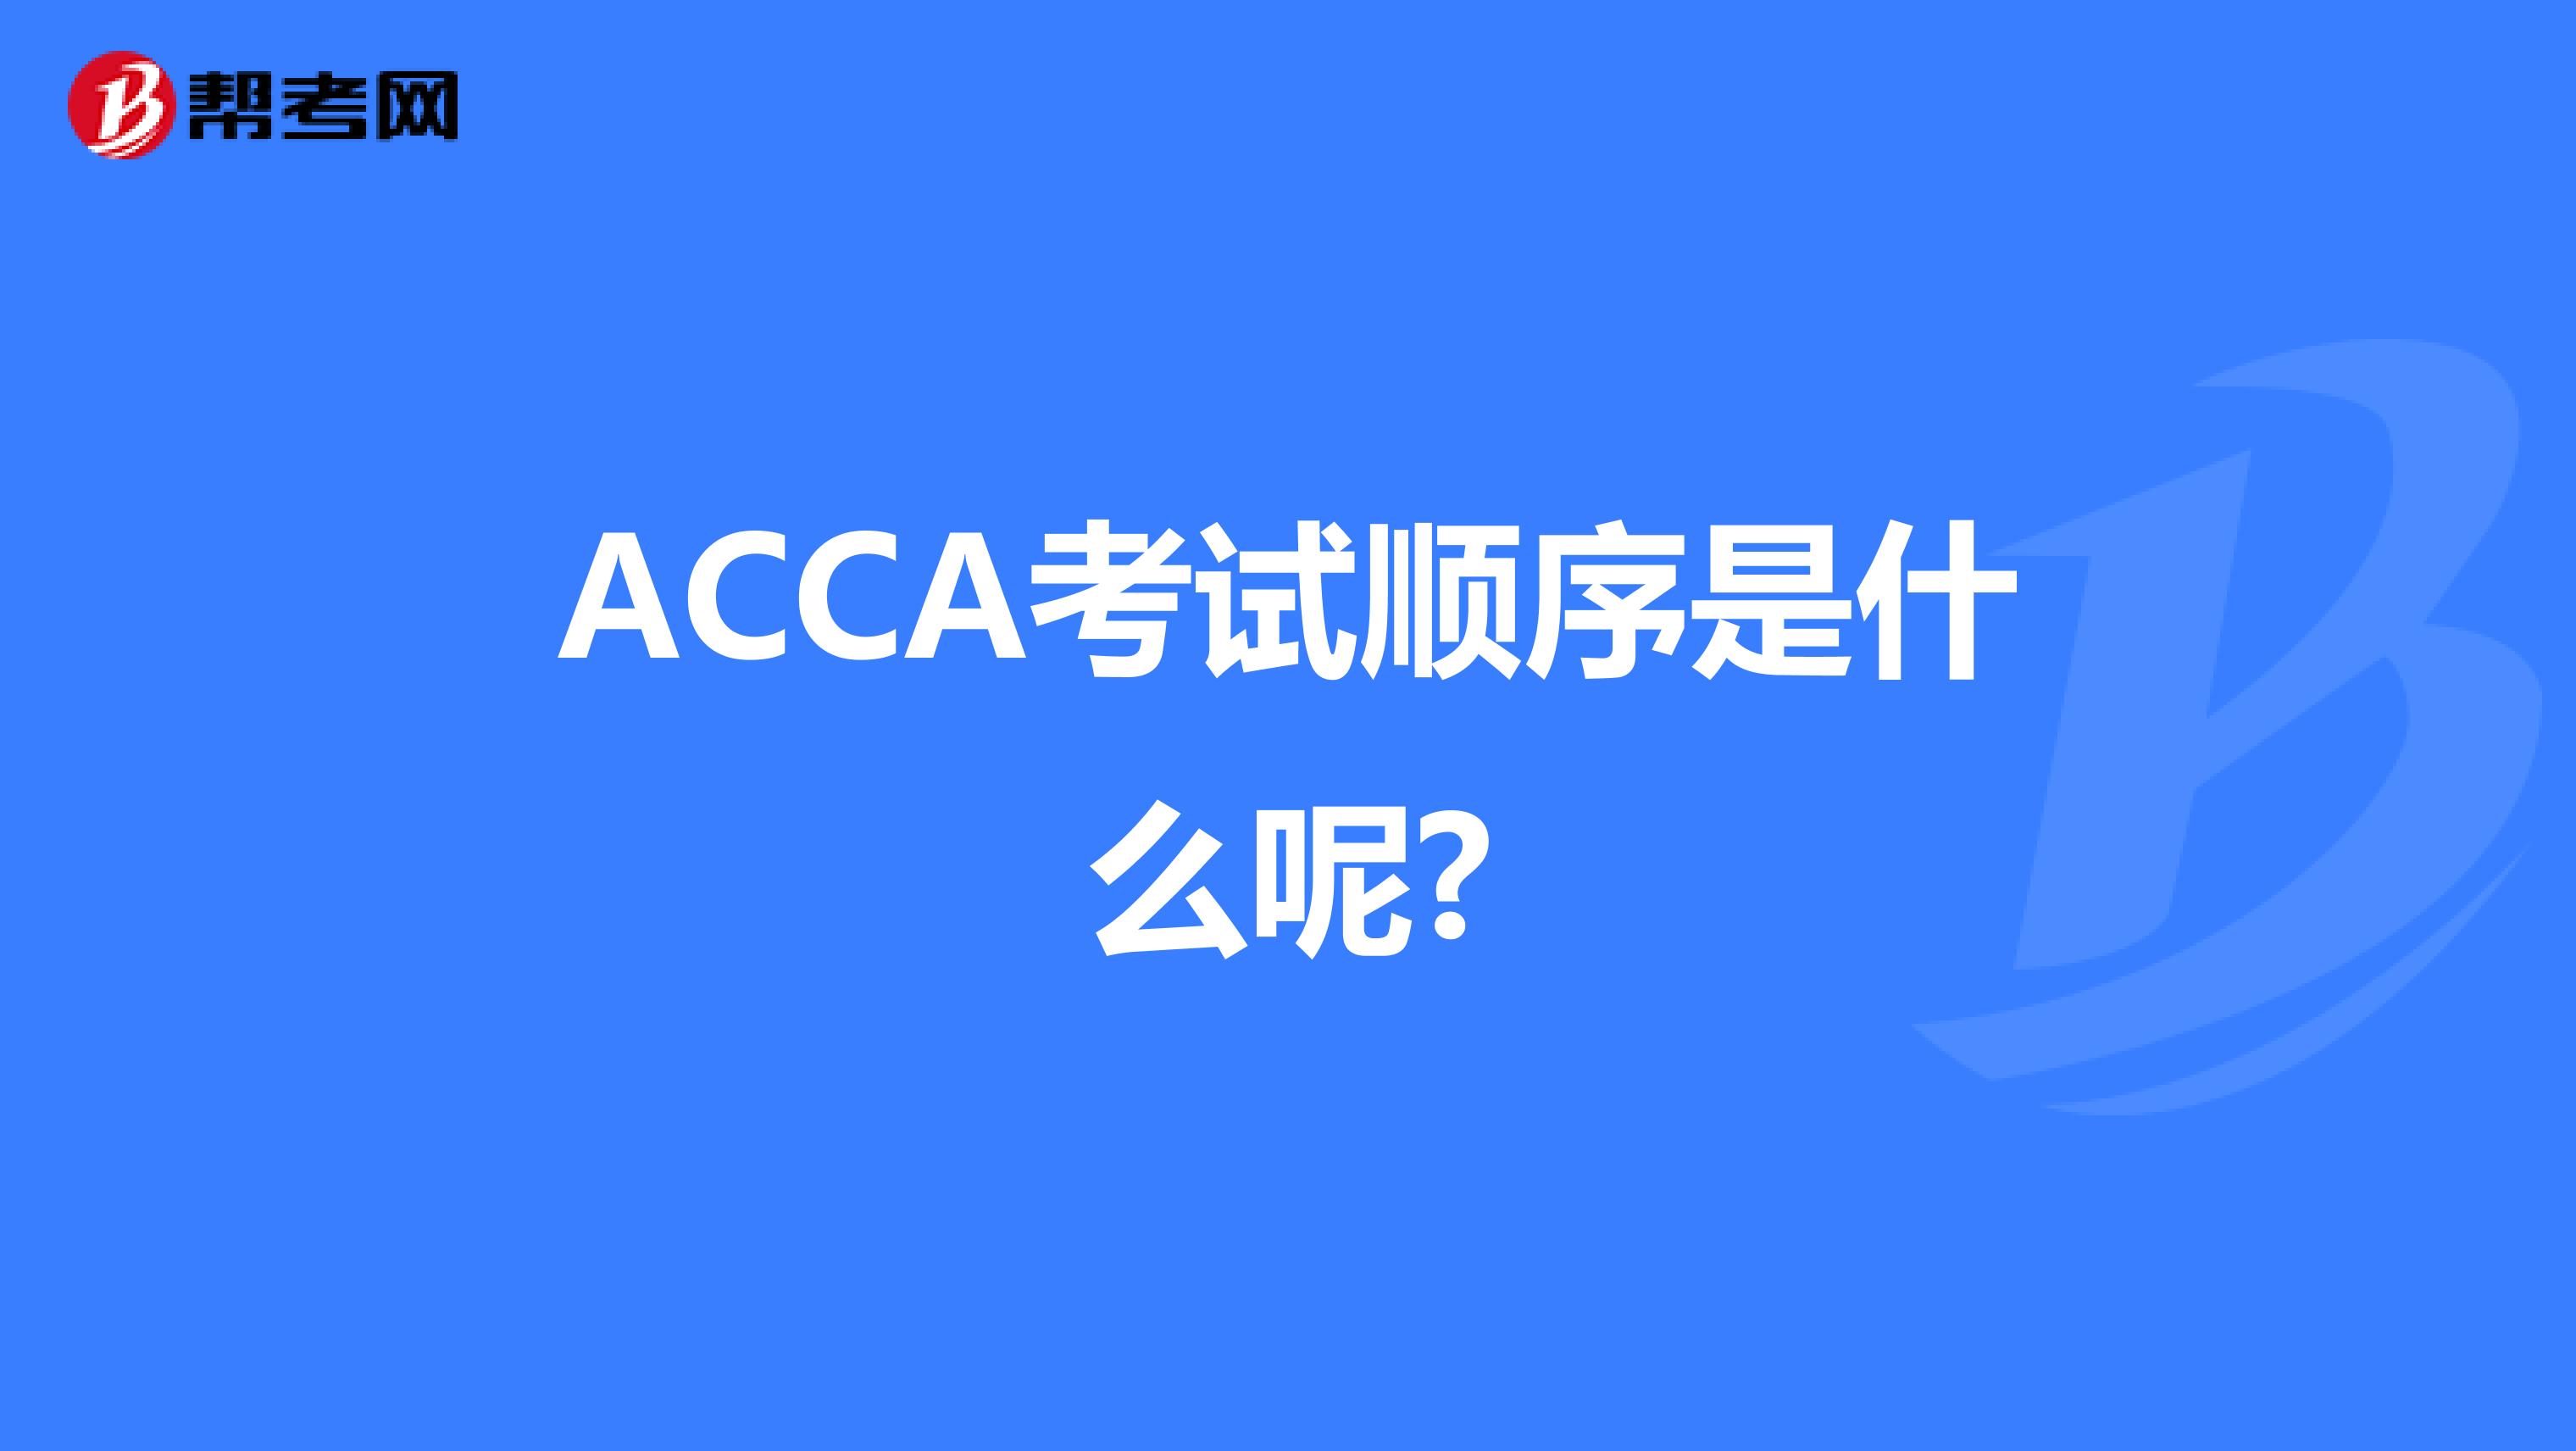 ACCA考试顺序是什么呢?